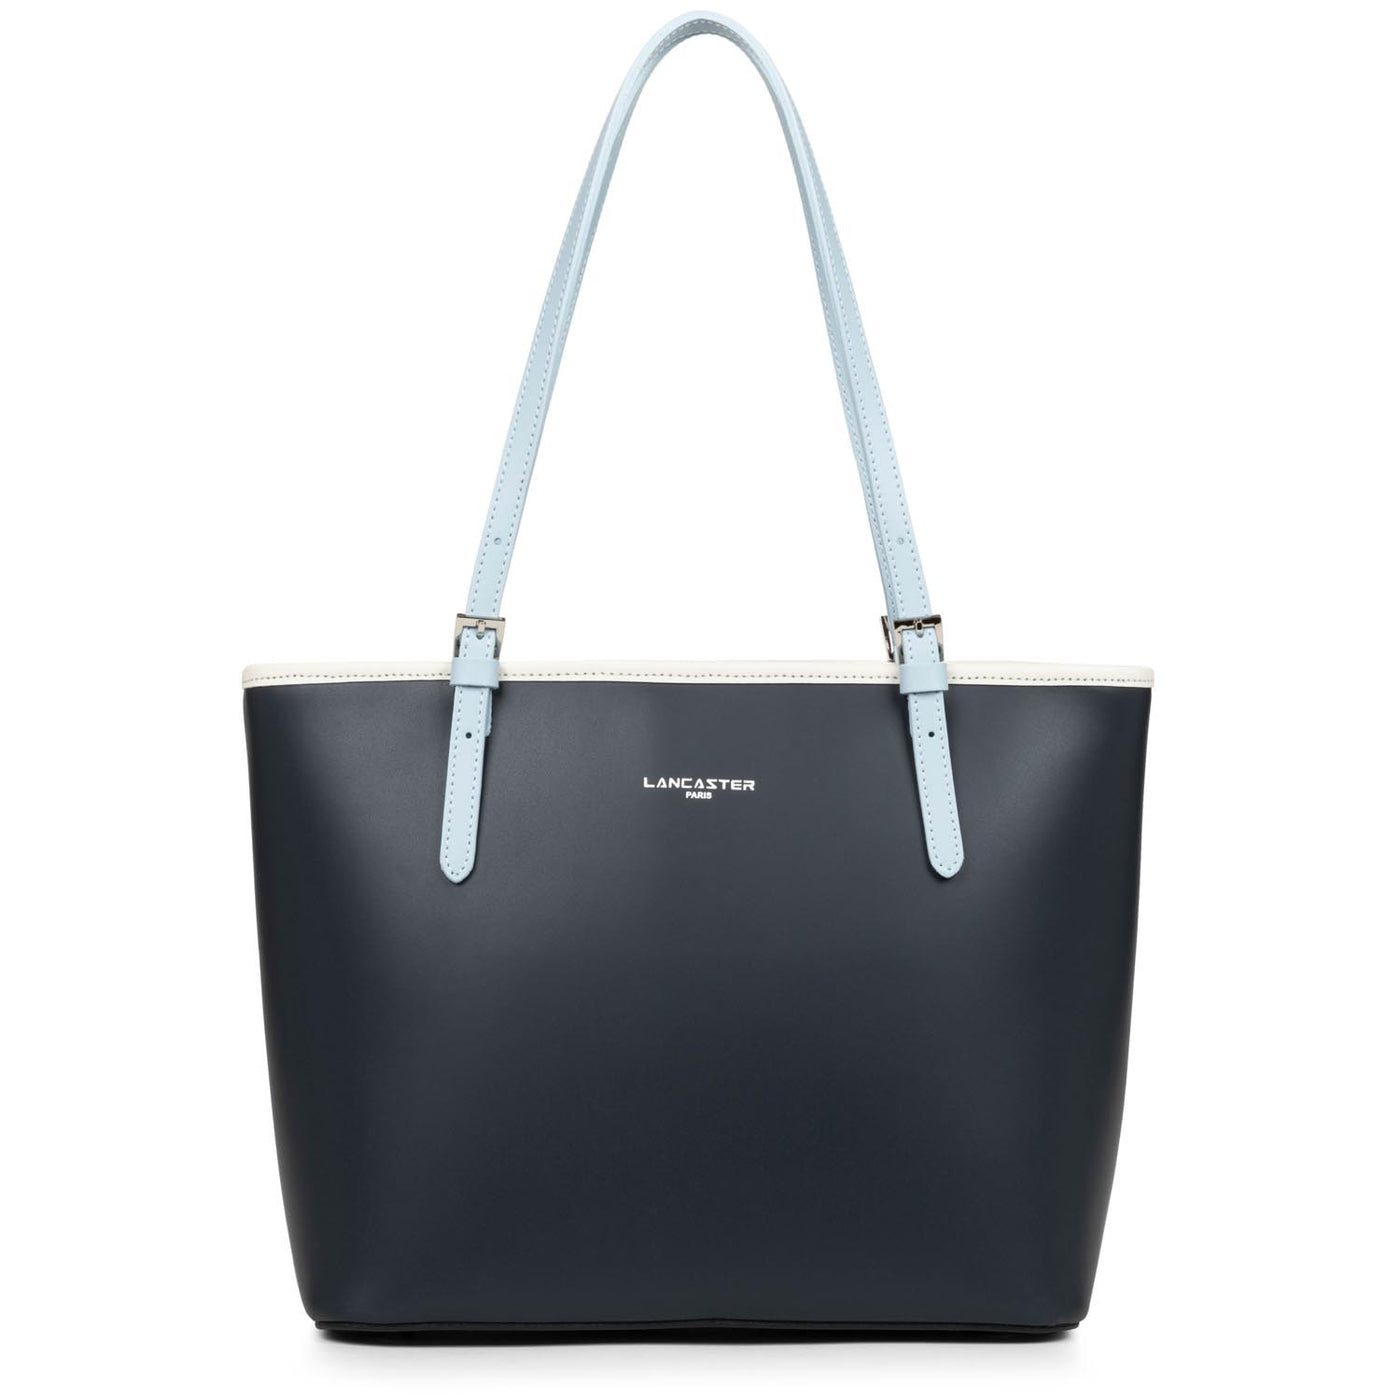 sac cabas épaule - smooth #couleur_bleu-fonc-ecru-bleu-ciel